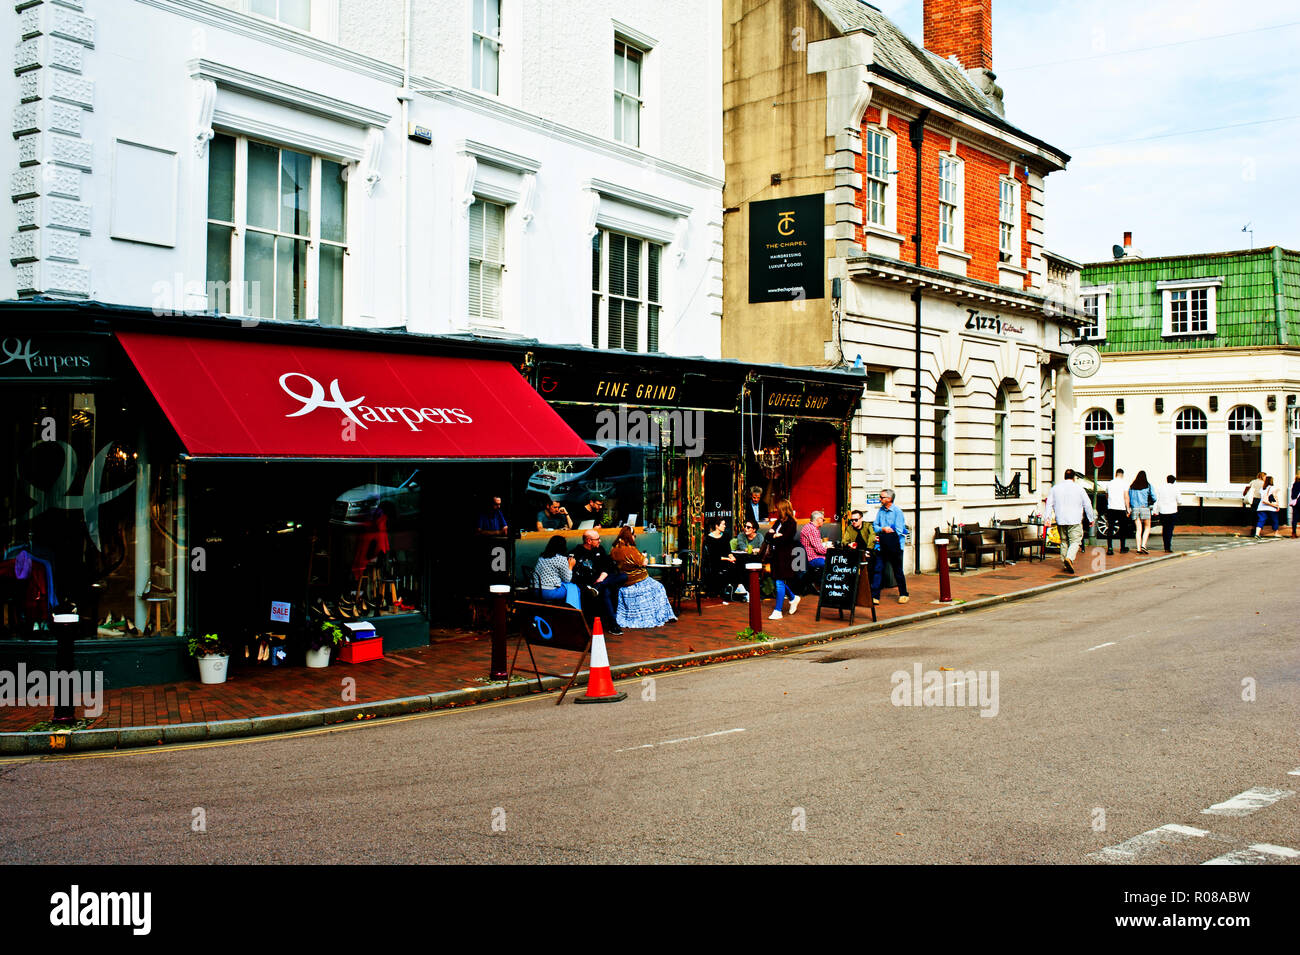 Find Grind coffee Shop, High street, Tunbridge Wells, Kent, England Stock Photo